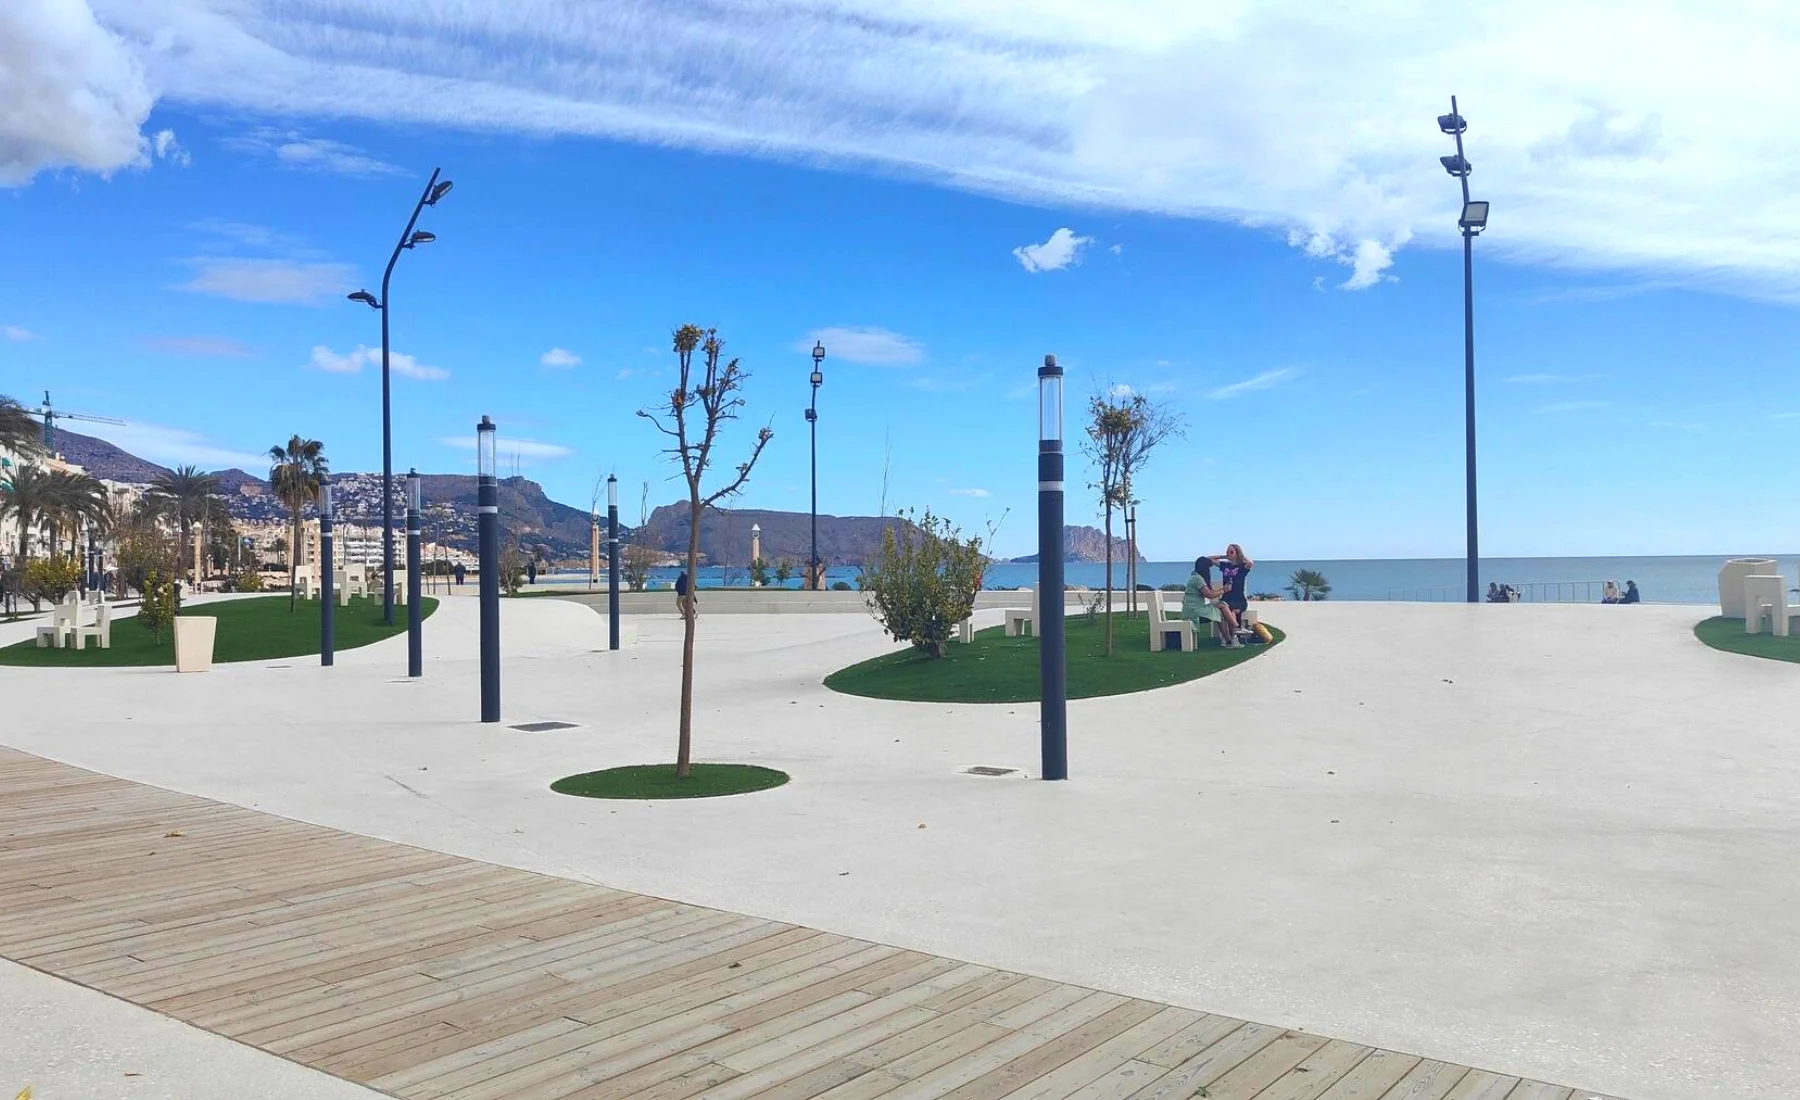 The new seafront promenade of Altea